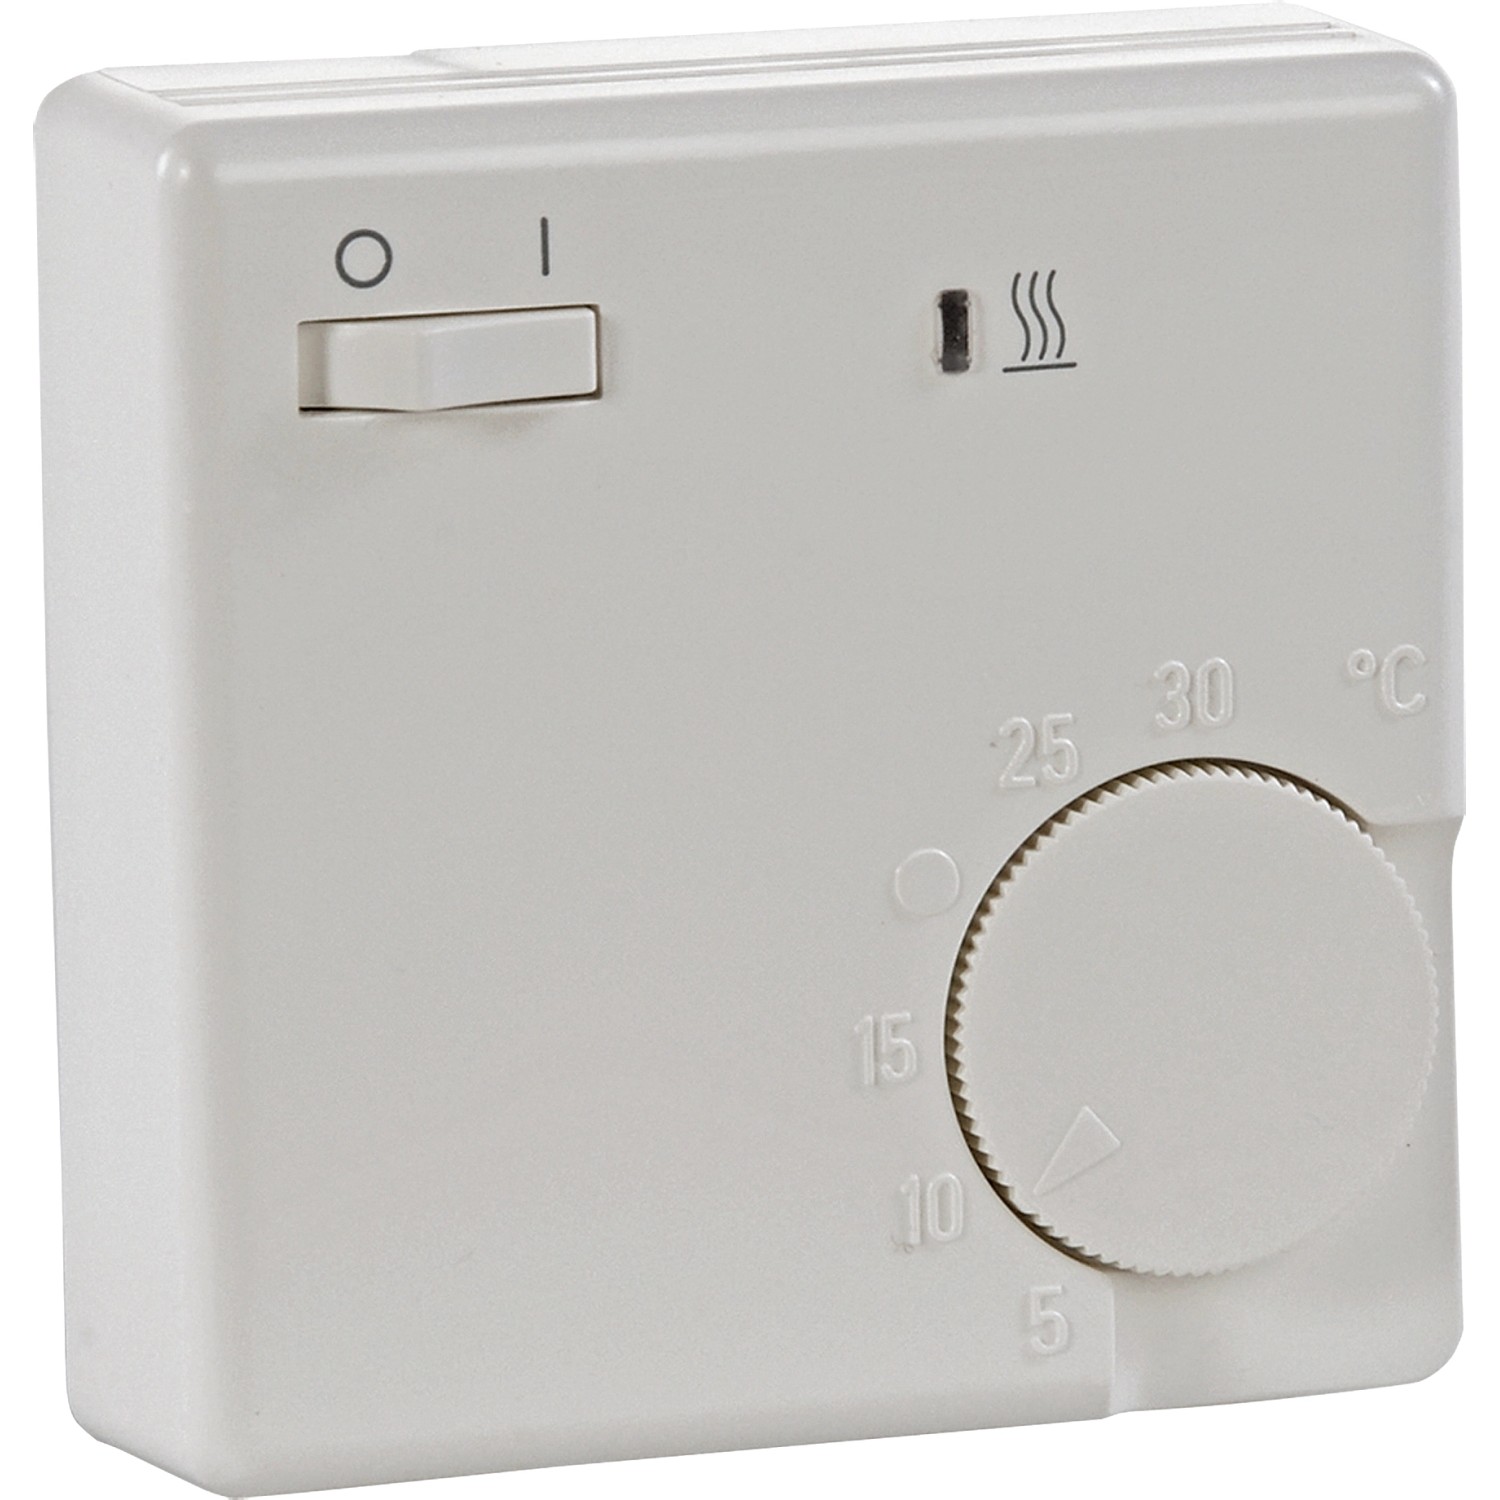 Standard-Thermostat RTR-E 3502 kaufen bei OBI